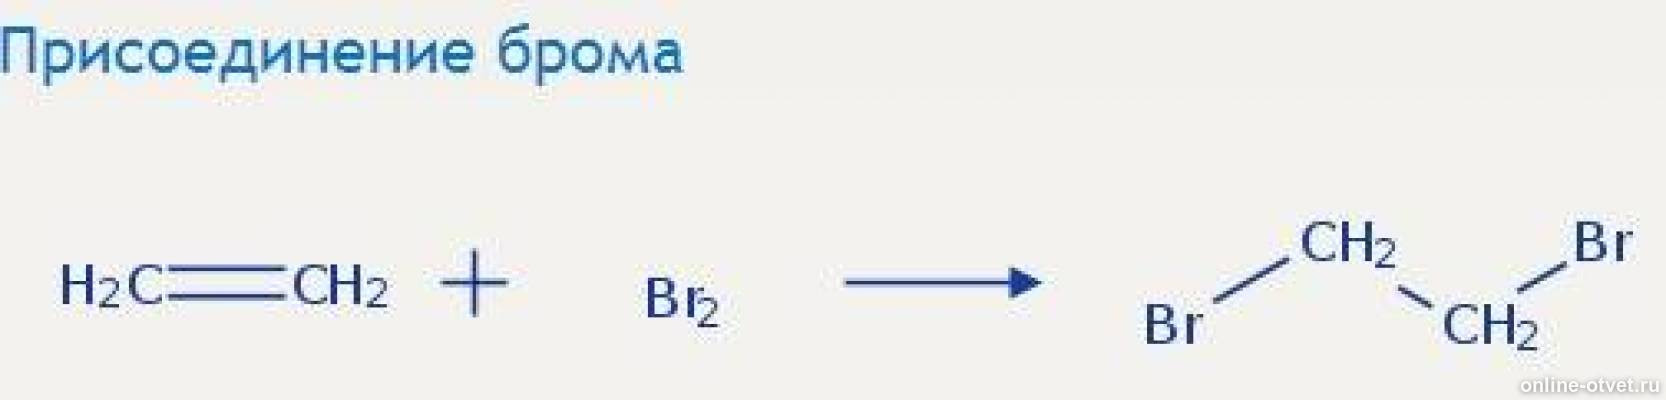 Присоединение брома. Этанол+CL. Реакция присоединения брома. C2h4 = диэтиловый эфир. Этилен дихлорэтан ацетилен